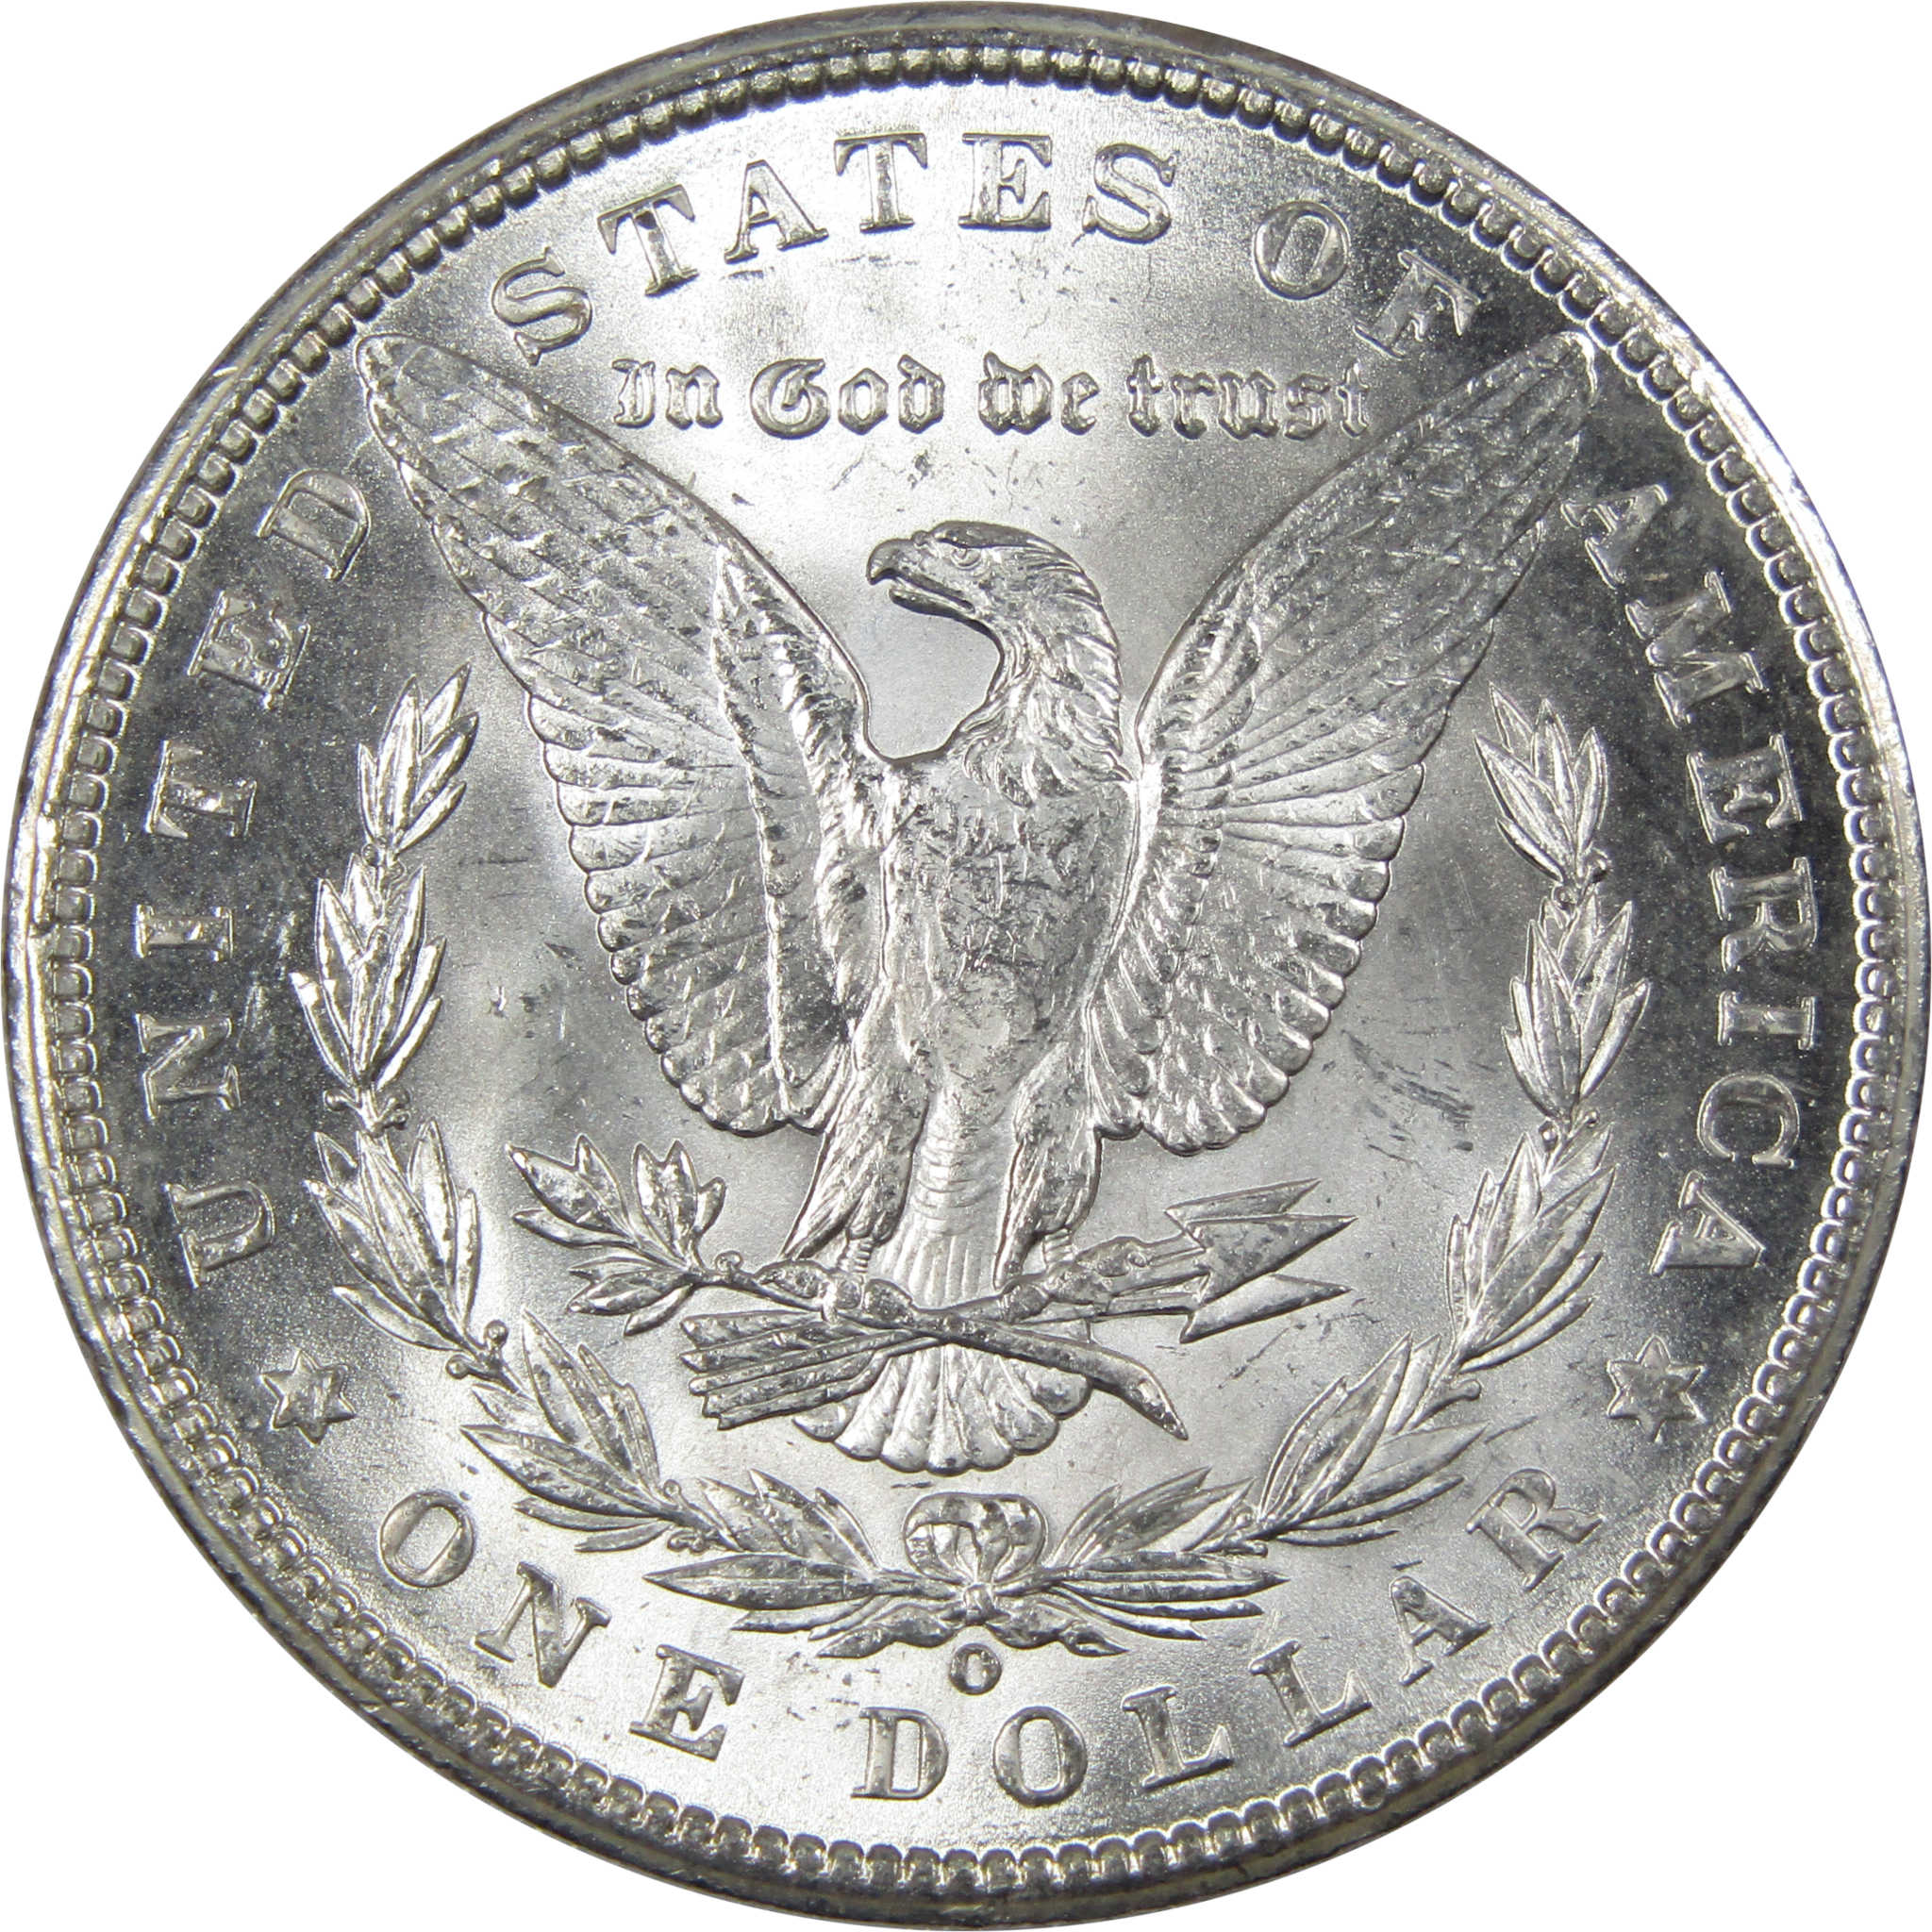 1900 O Morgan Dollar BU Uncirculated Mint State 90% Silver SKU:IPC9753 - Morgan coin - Morgan silver dollar - Morgan silver dollar for sale - Profile Coins &amp; Collectibles